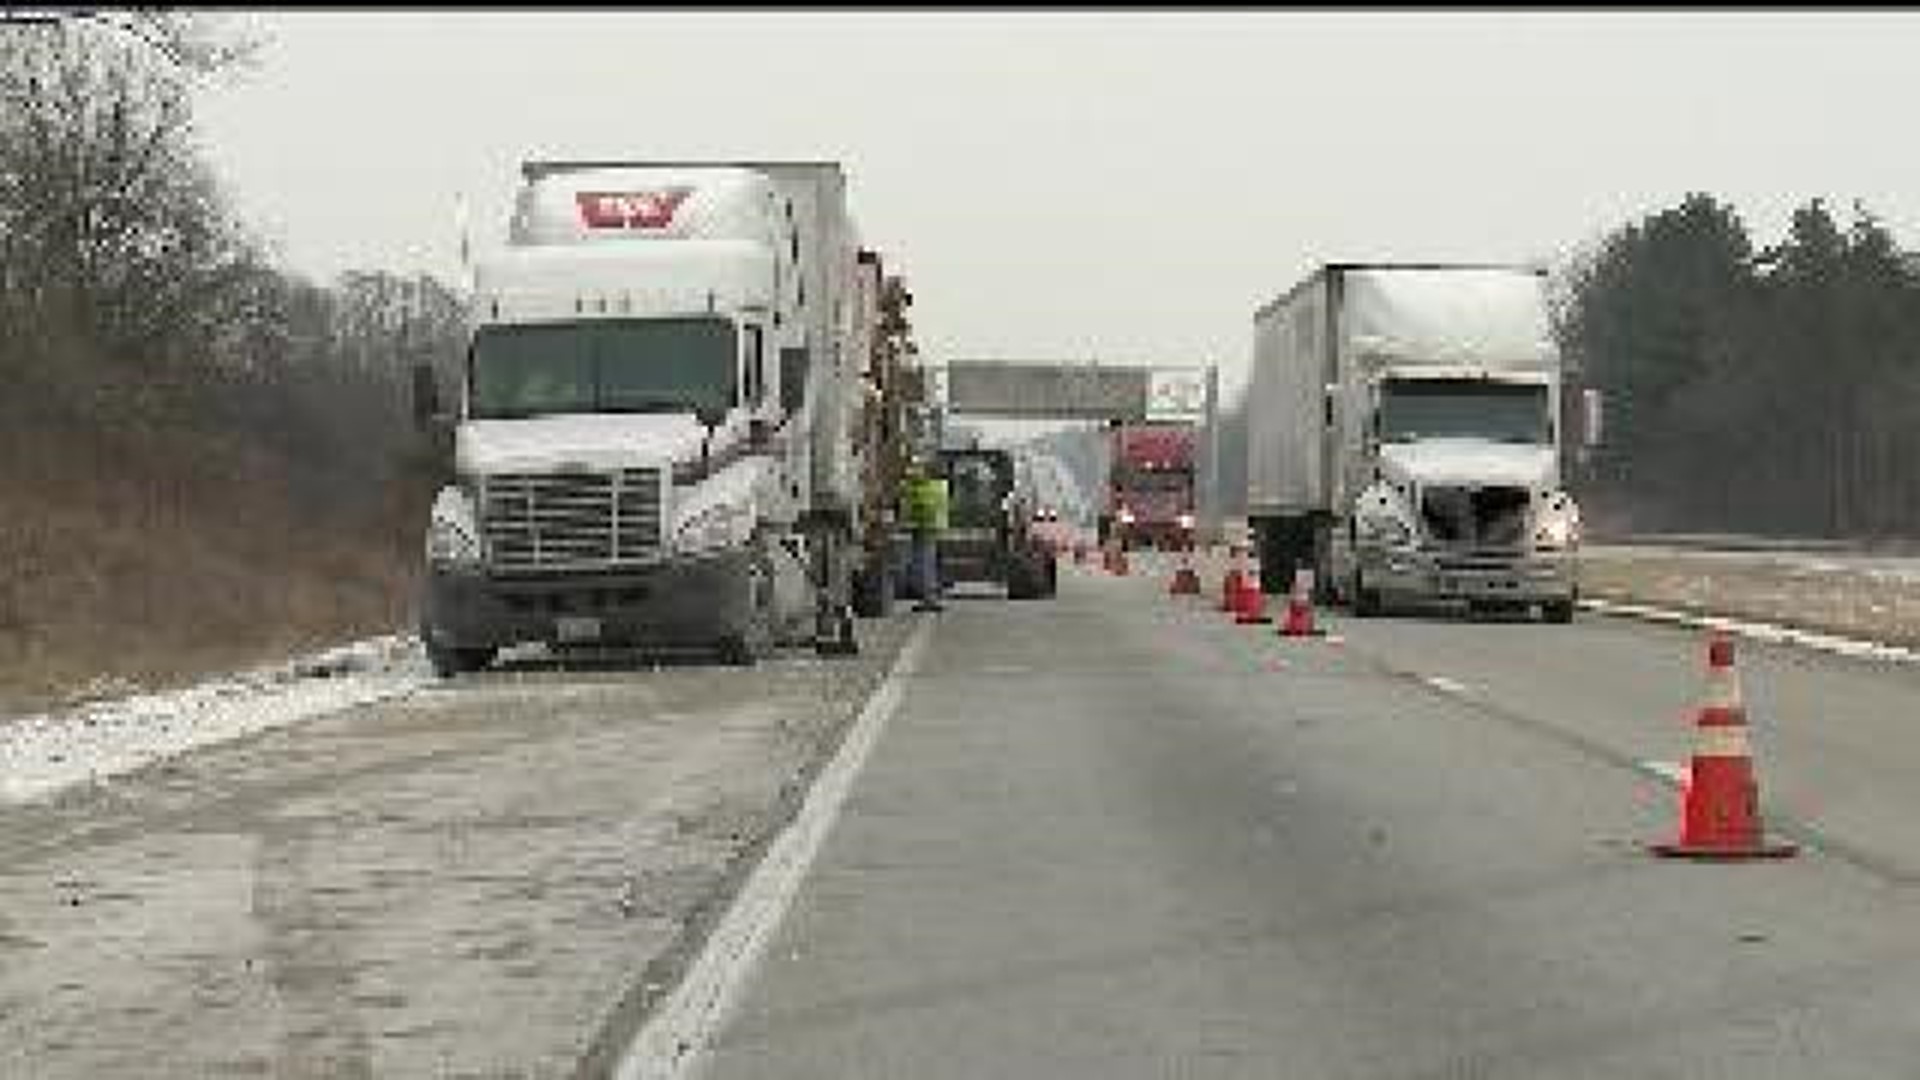 Crash on I-80 causes lane closure